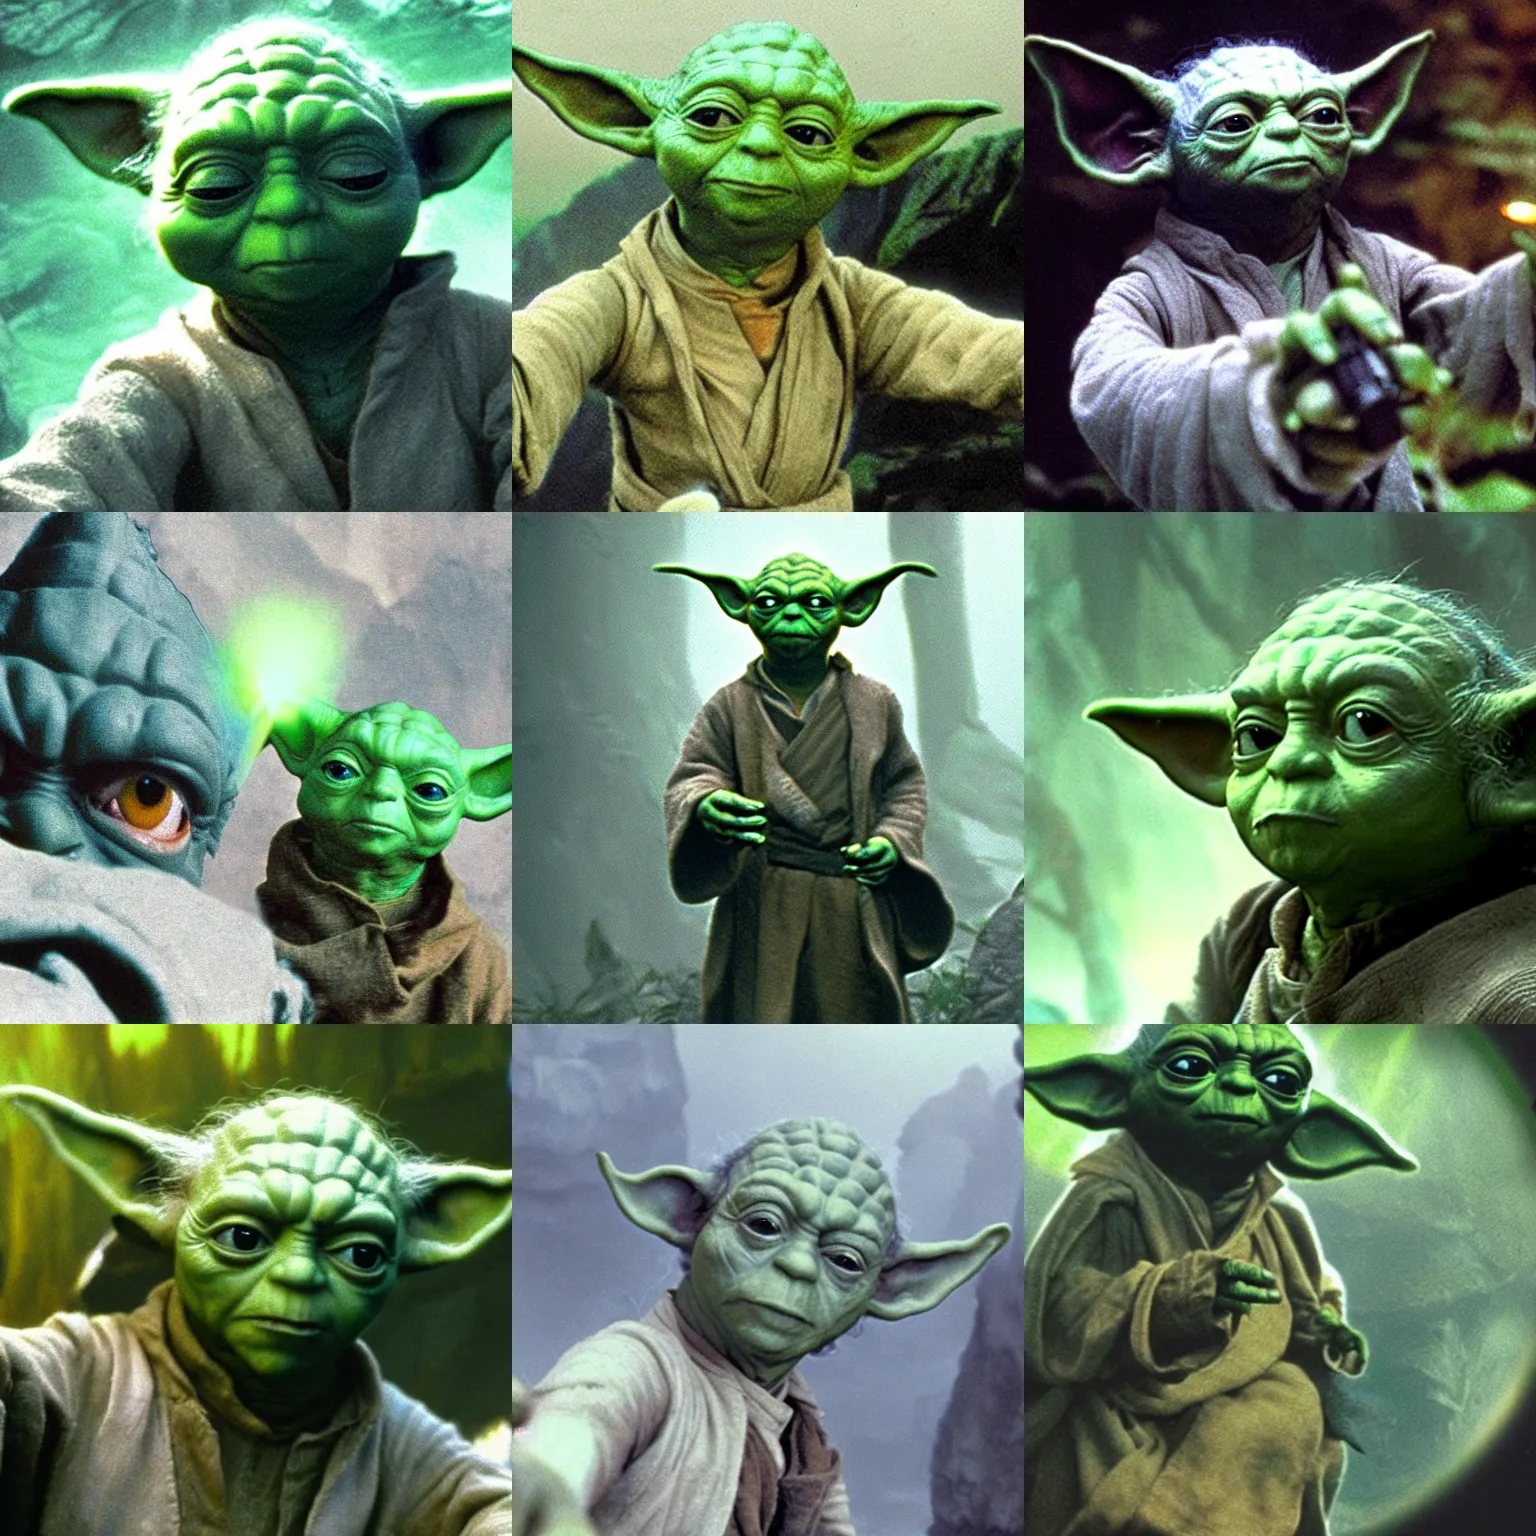 Prompt: Selfie of Yoda on Dagobah